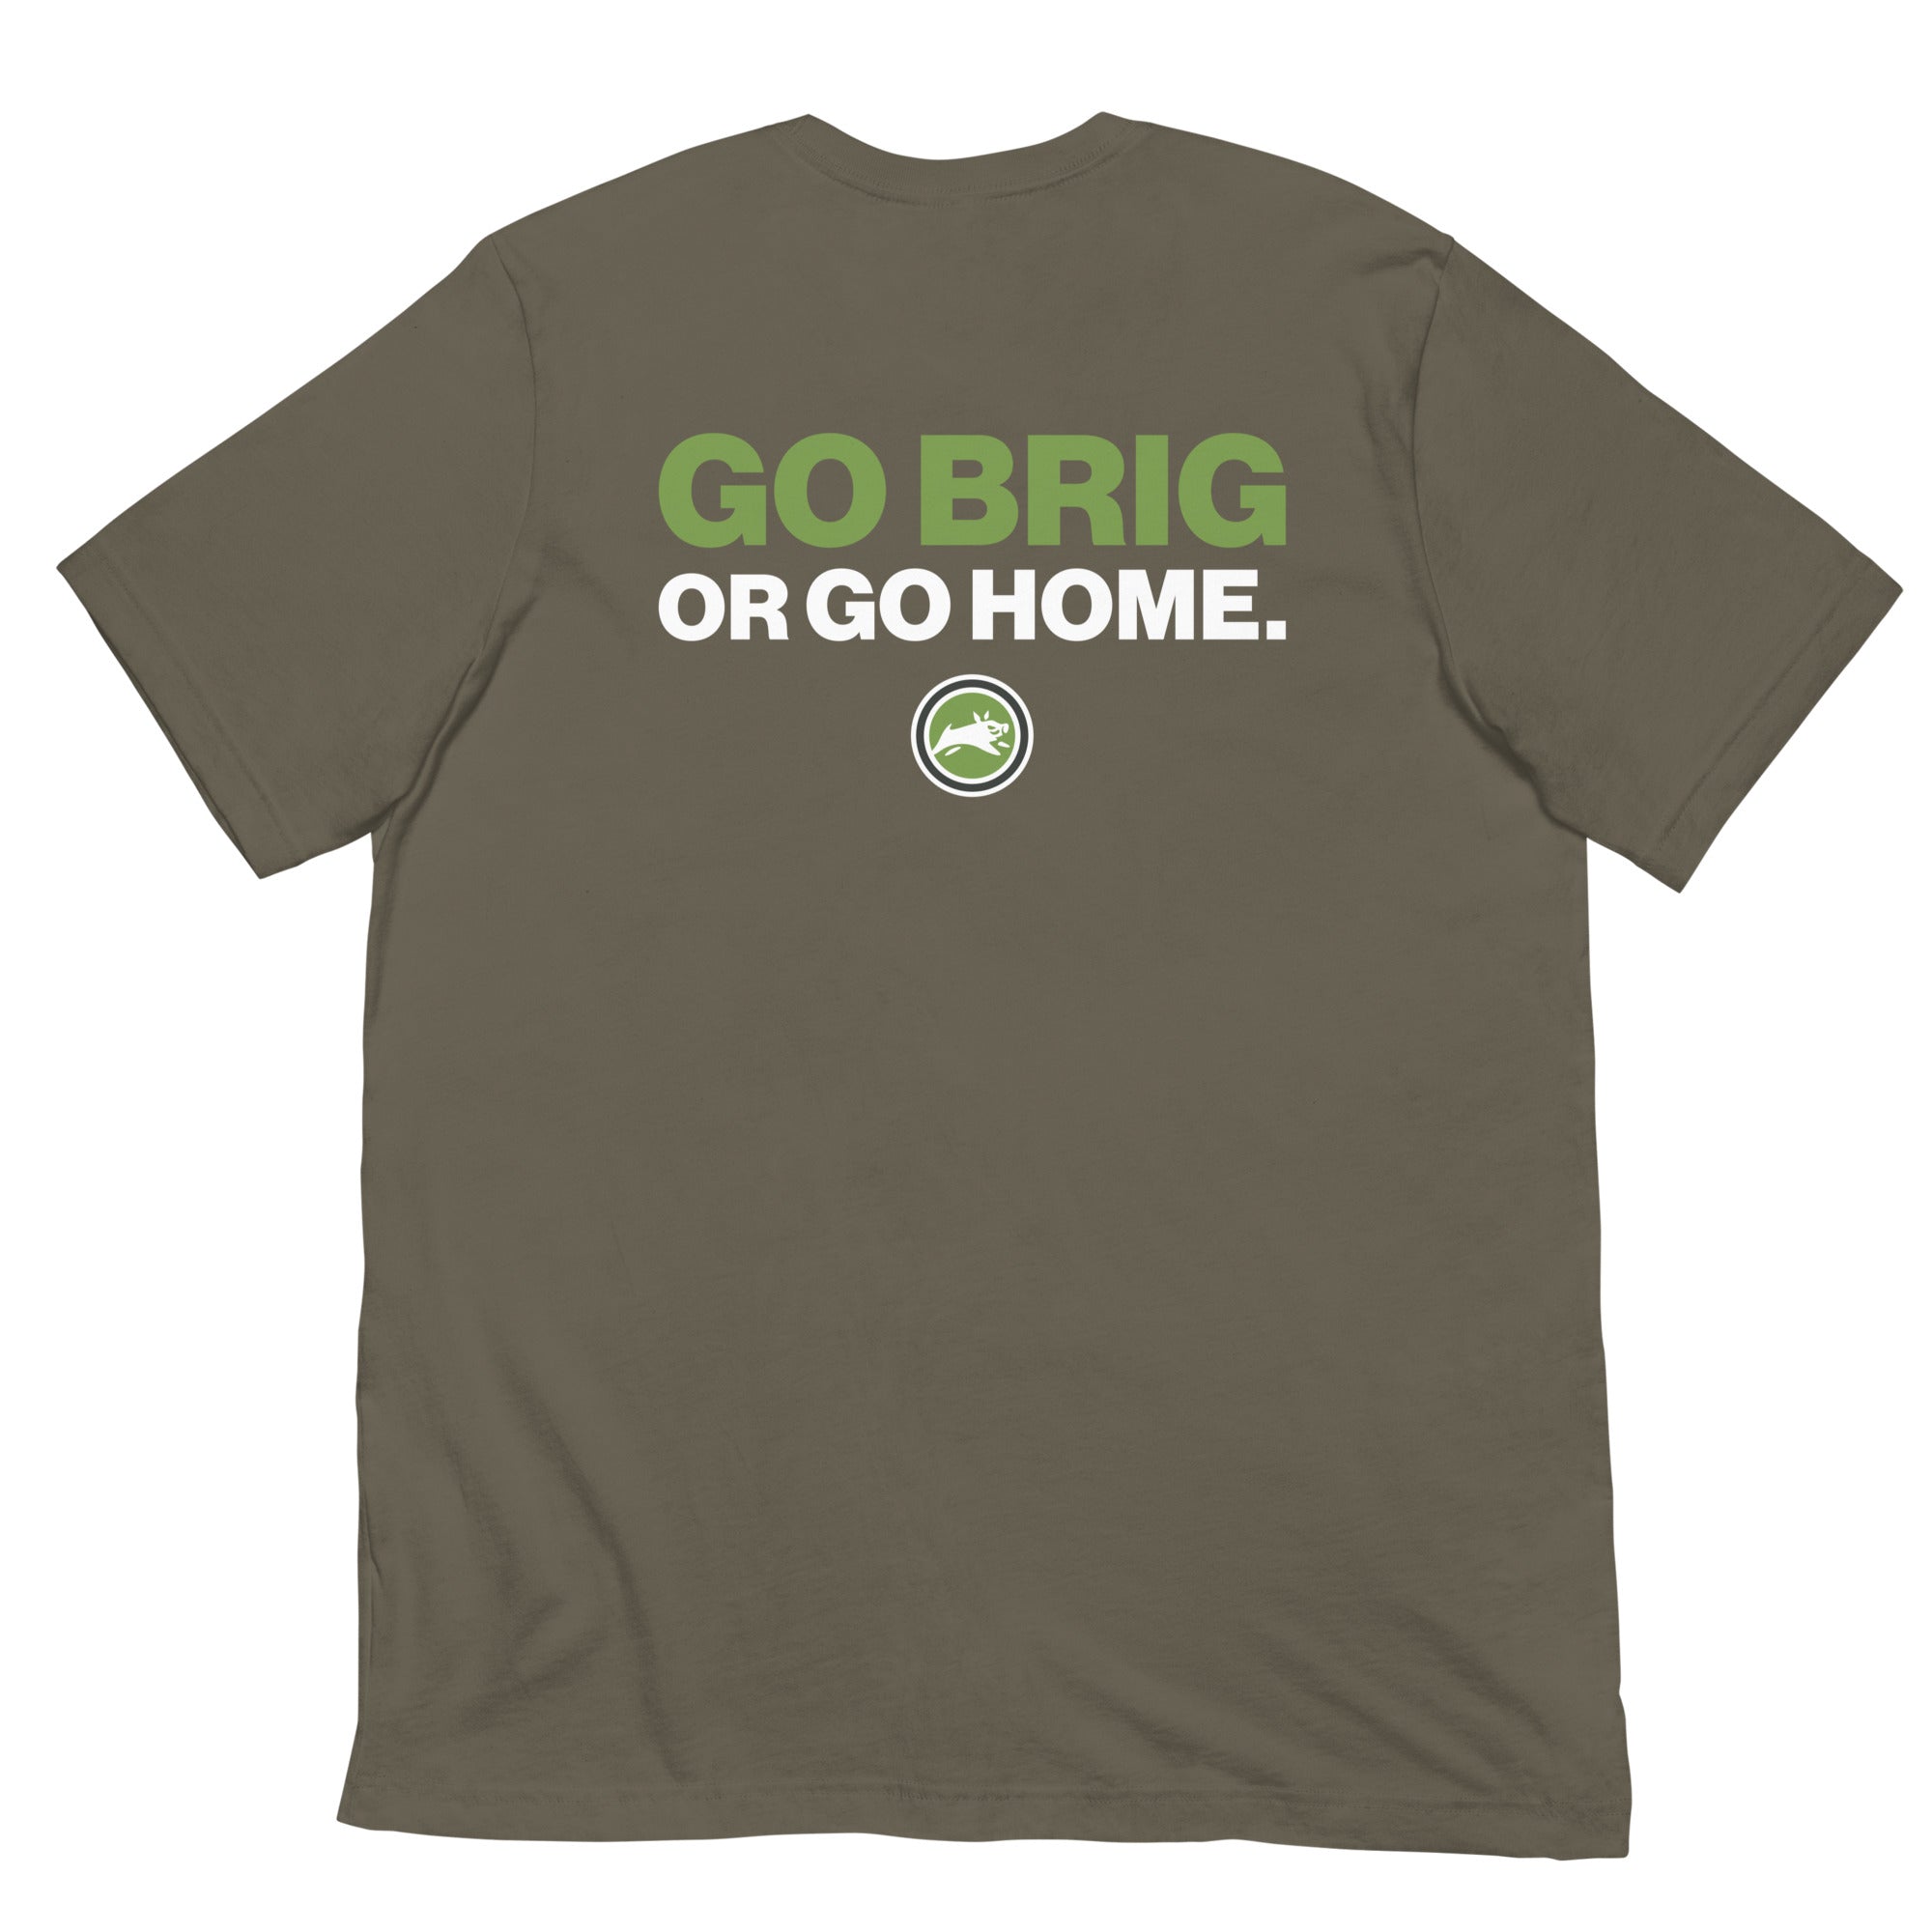 Go Brig or Go Home. - Short-Sleeve Unisex T-Shirt